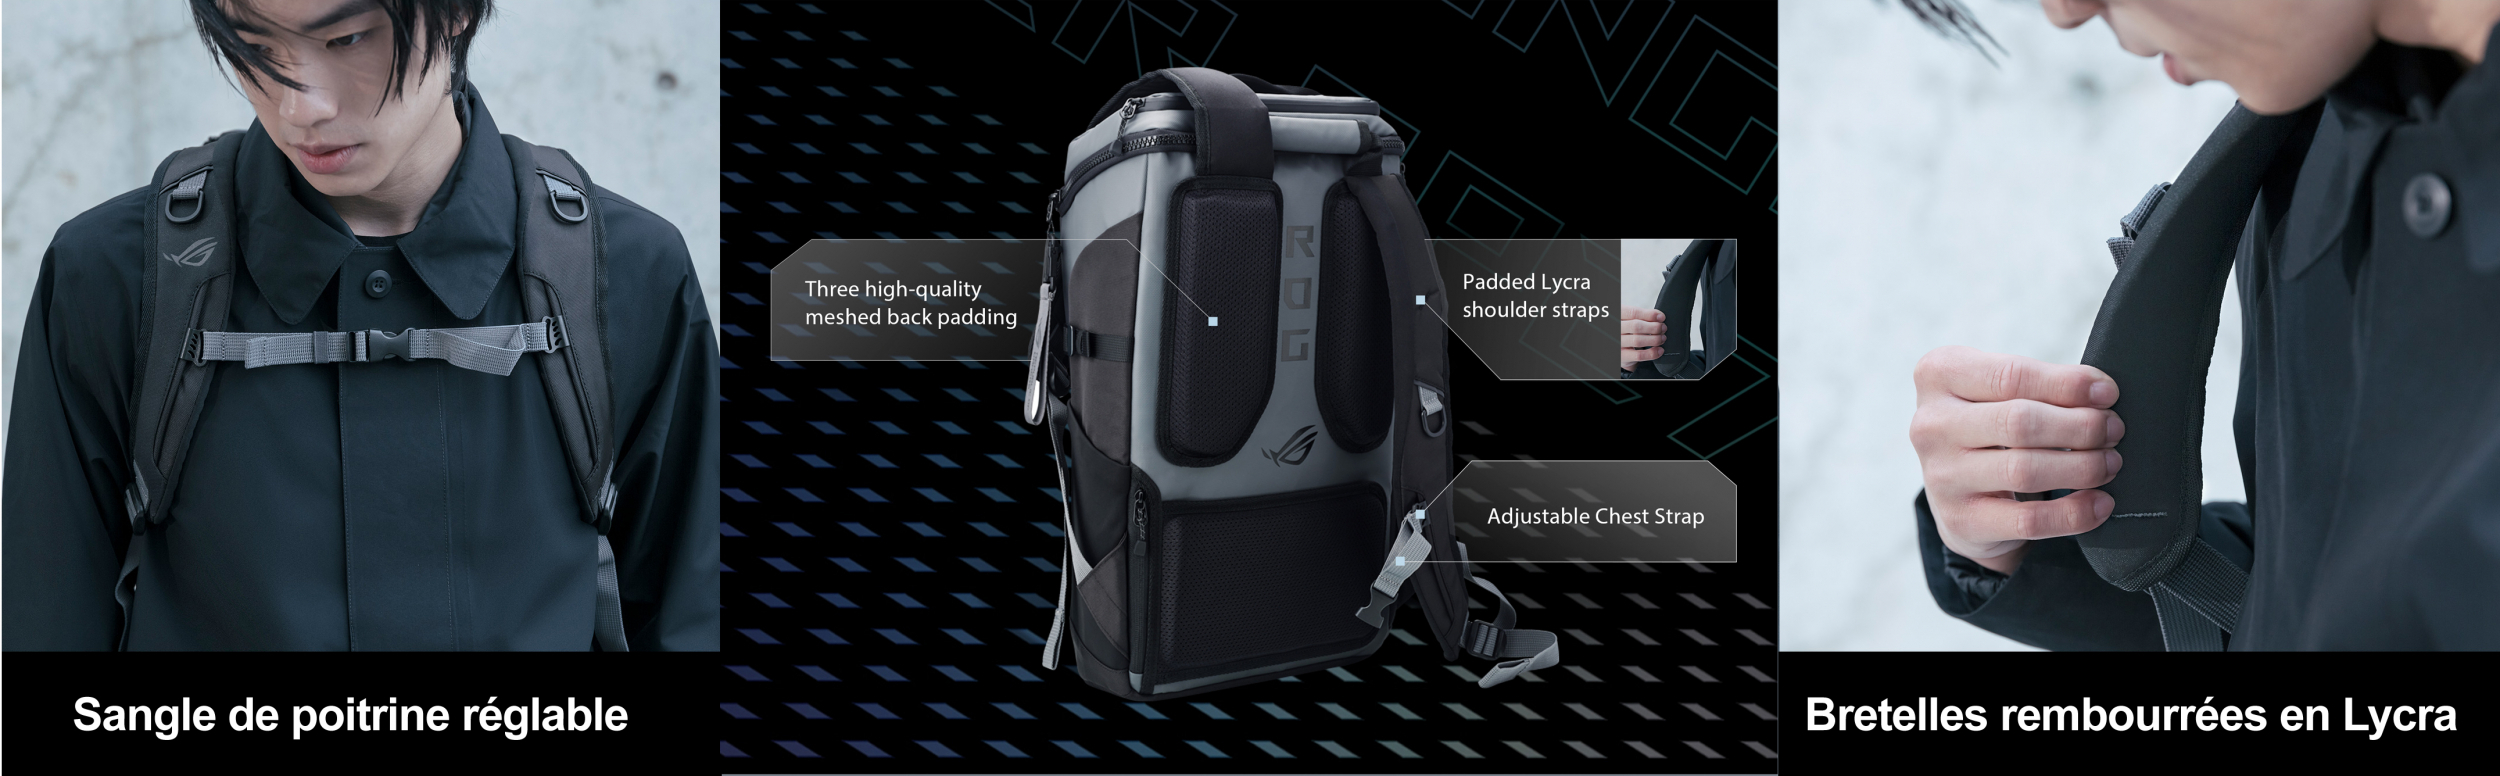 Asus Backpack ROG Ranger BP2701 grey Cybertext Edition